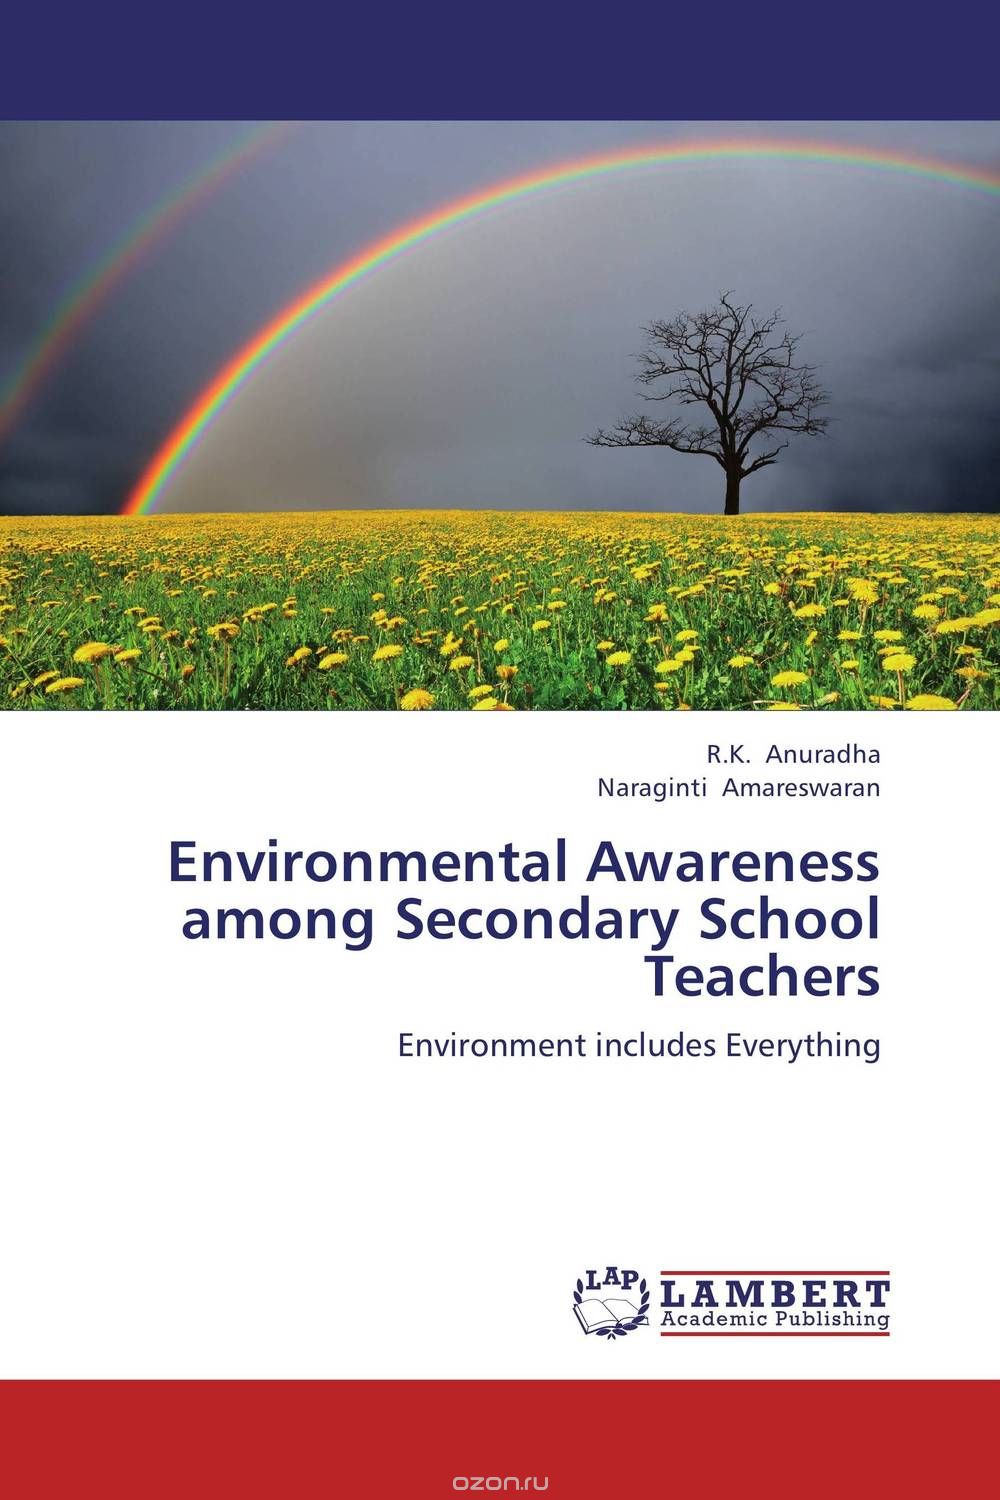 Скачать книгу "Environmental Awareness among Secondary School Teachers"